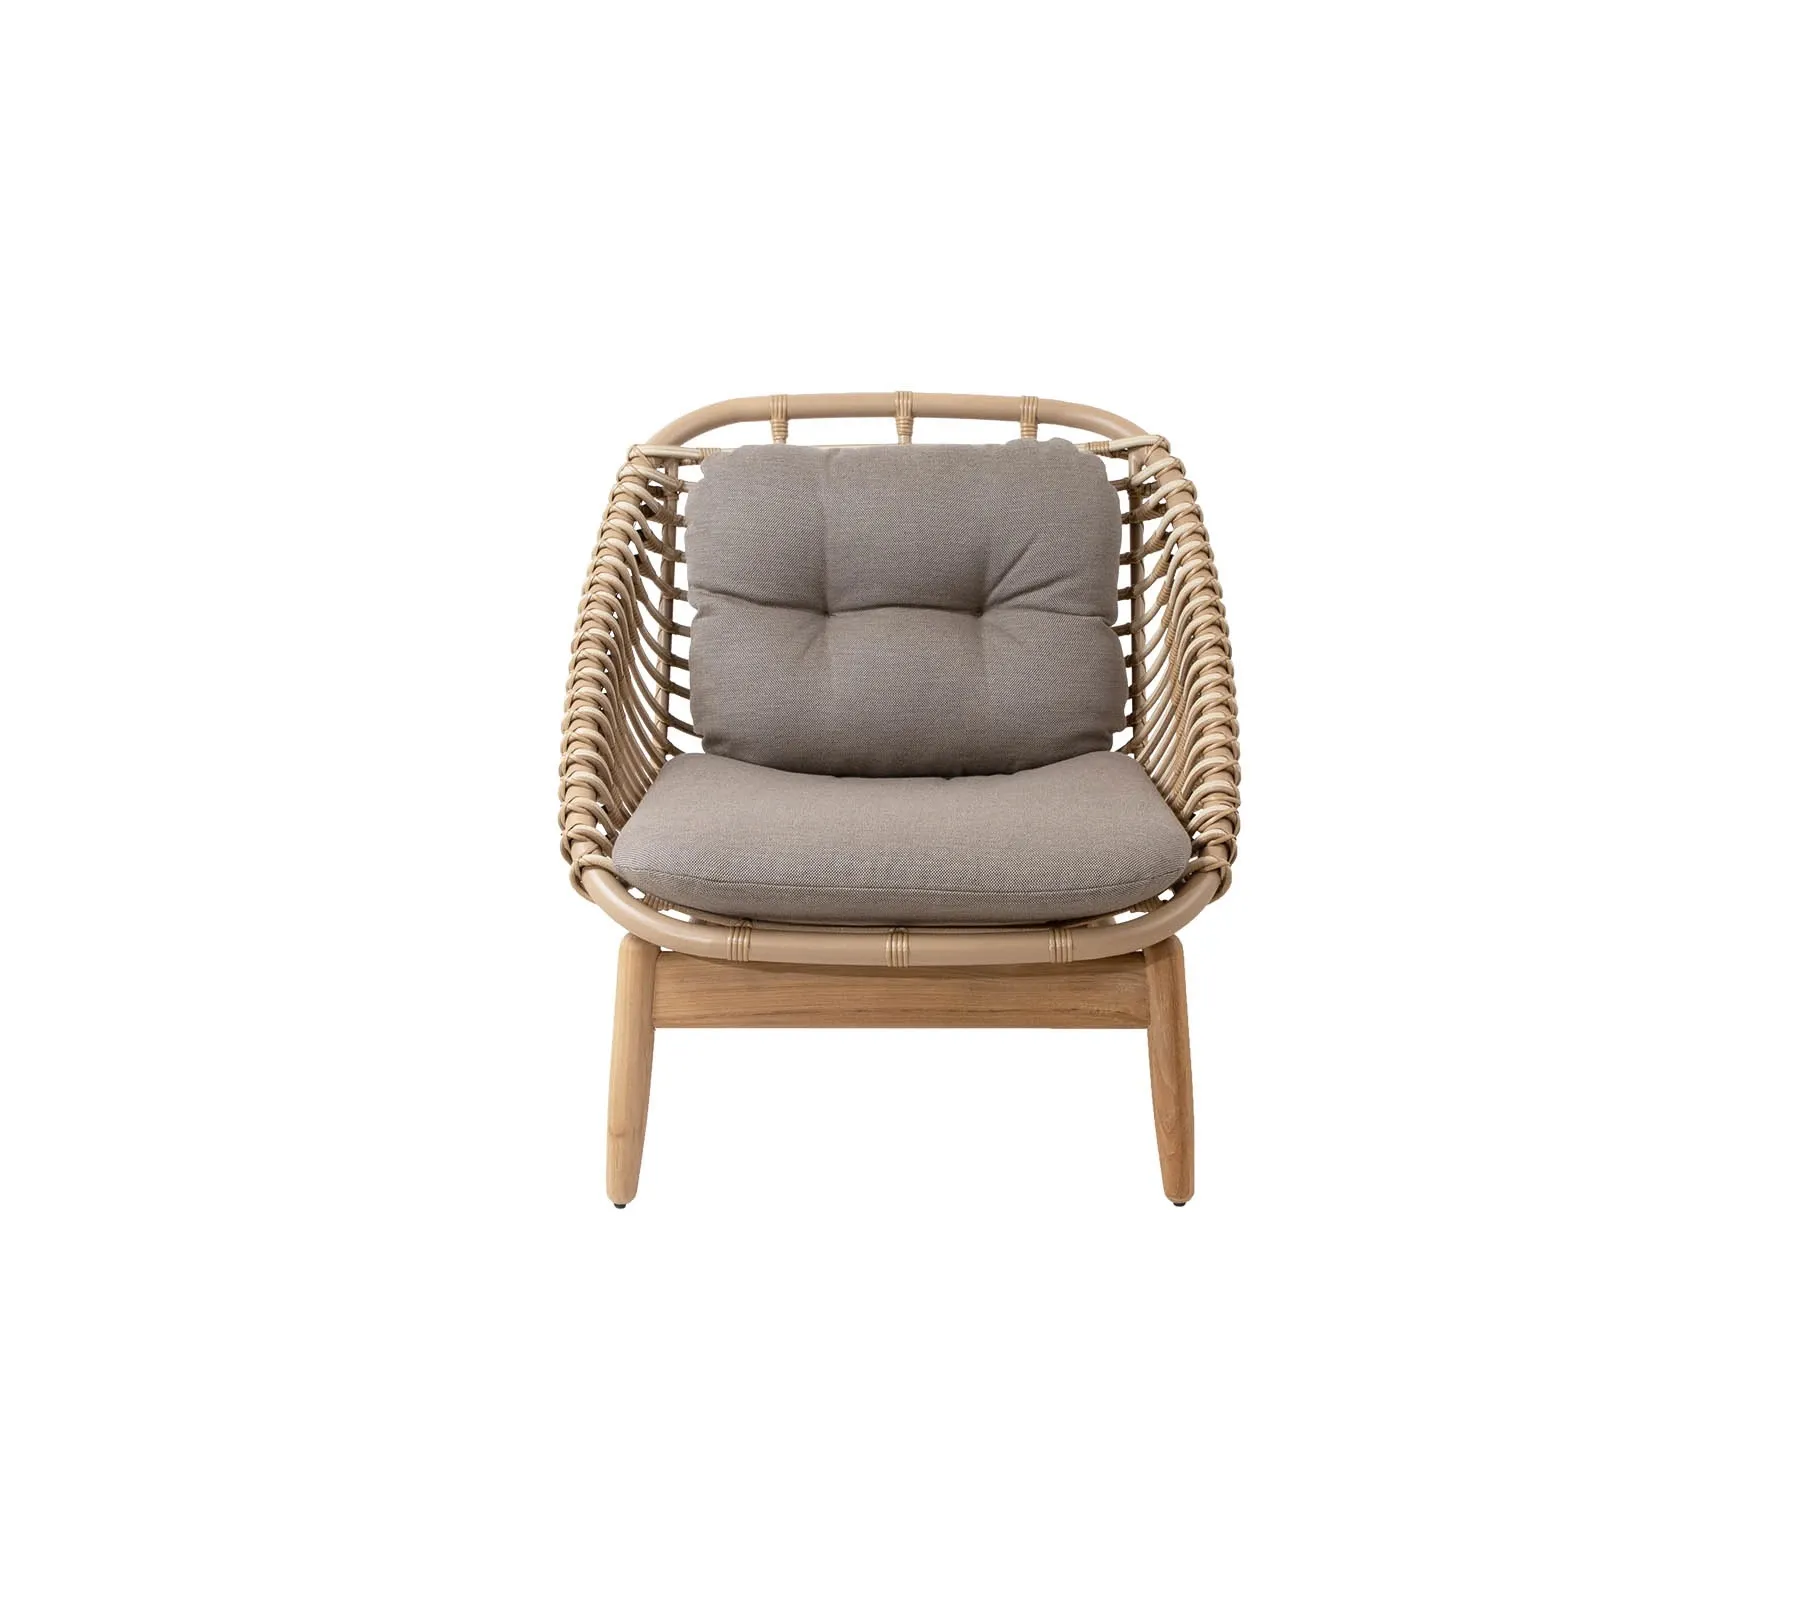 Morden teak wood outdoor sofa set wooden garden furniture patio rattan chair couch with chair set